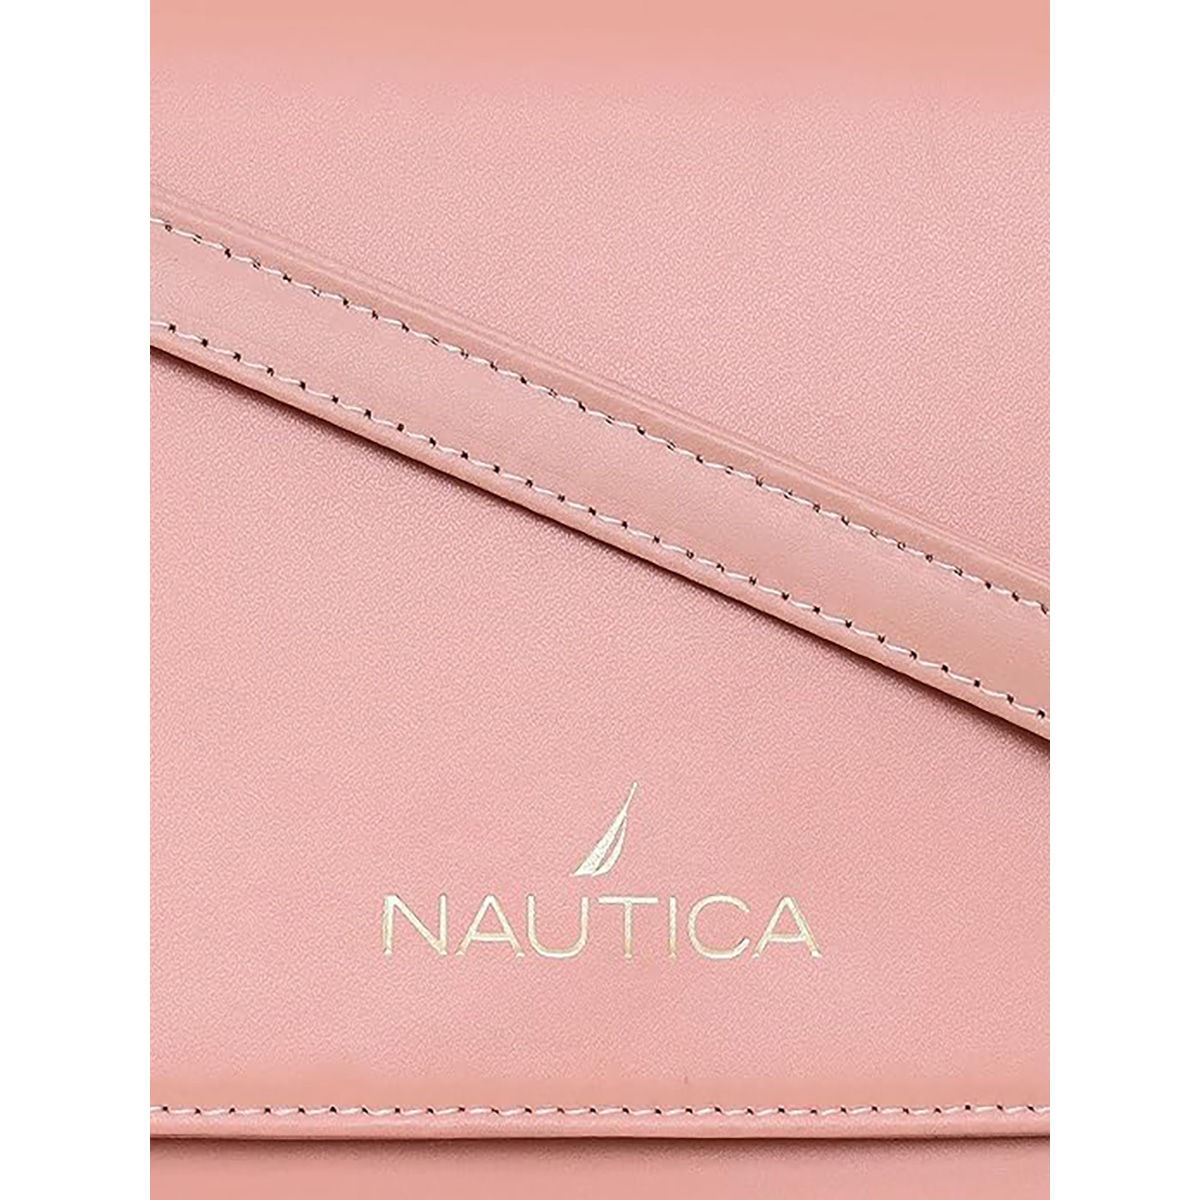 SOLD New Ladies Nautica Wallet | Wallet, Lady, Bags